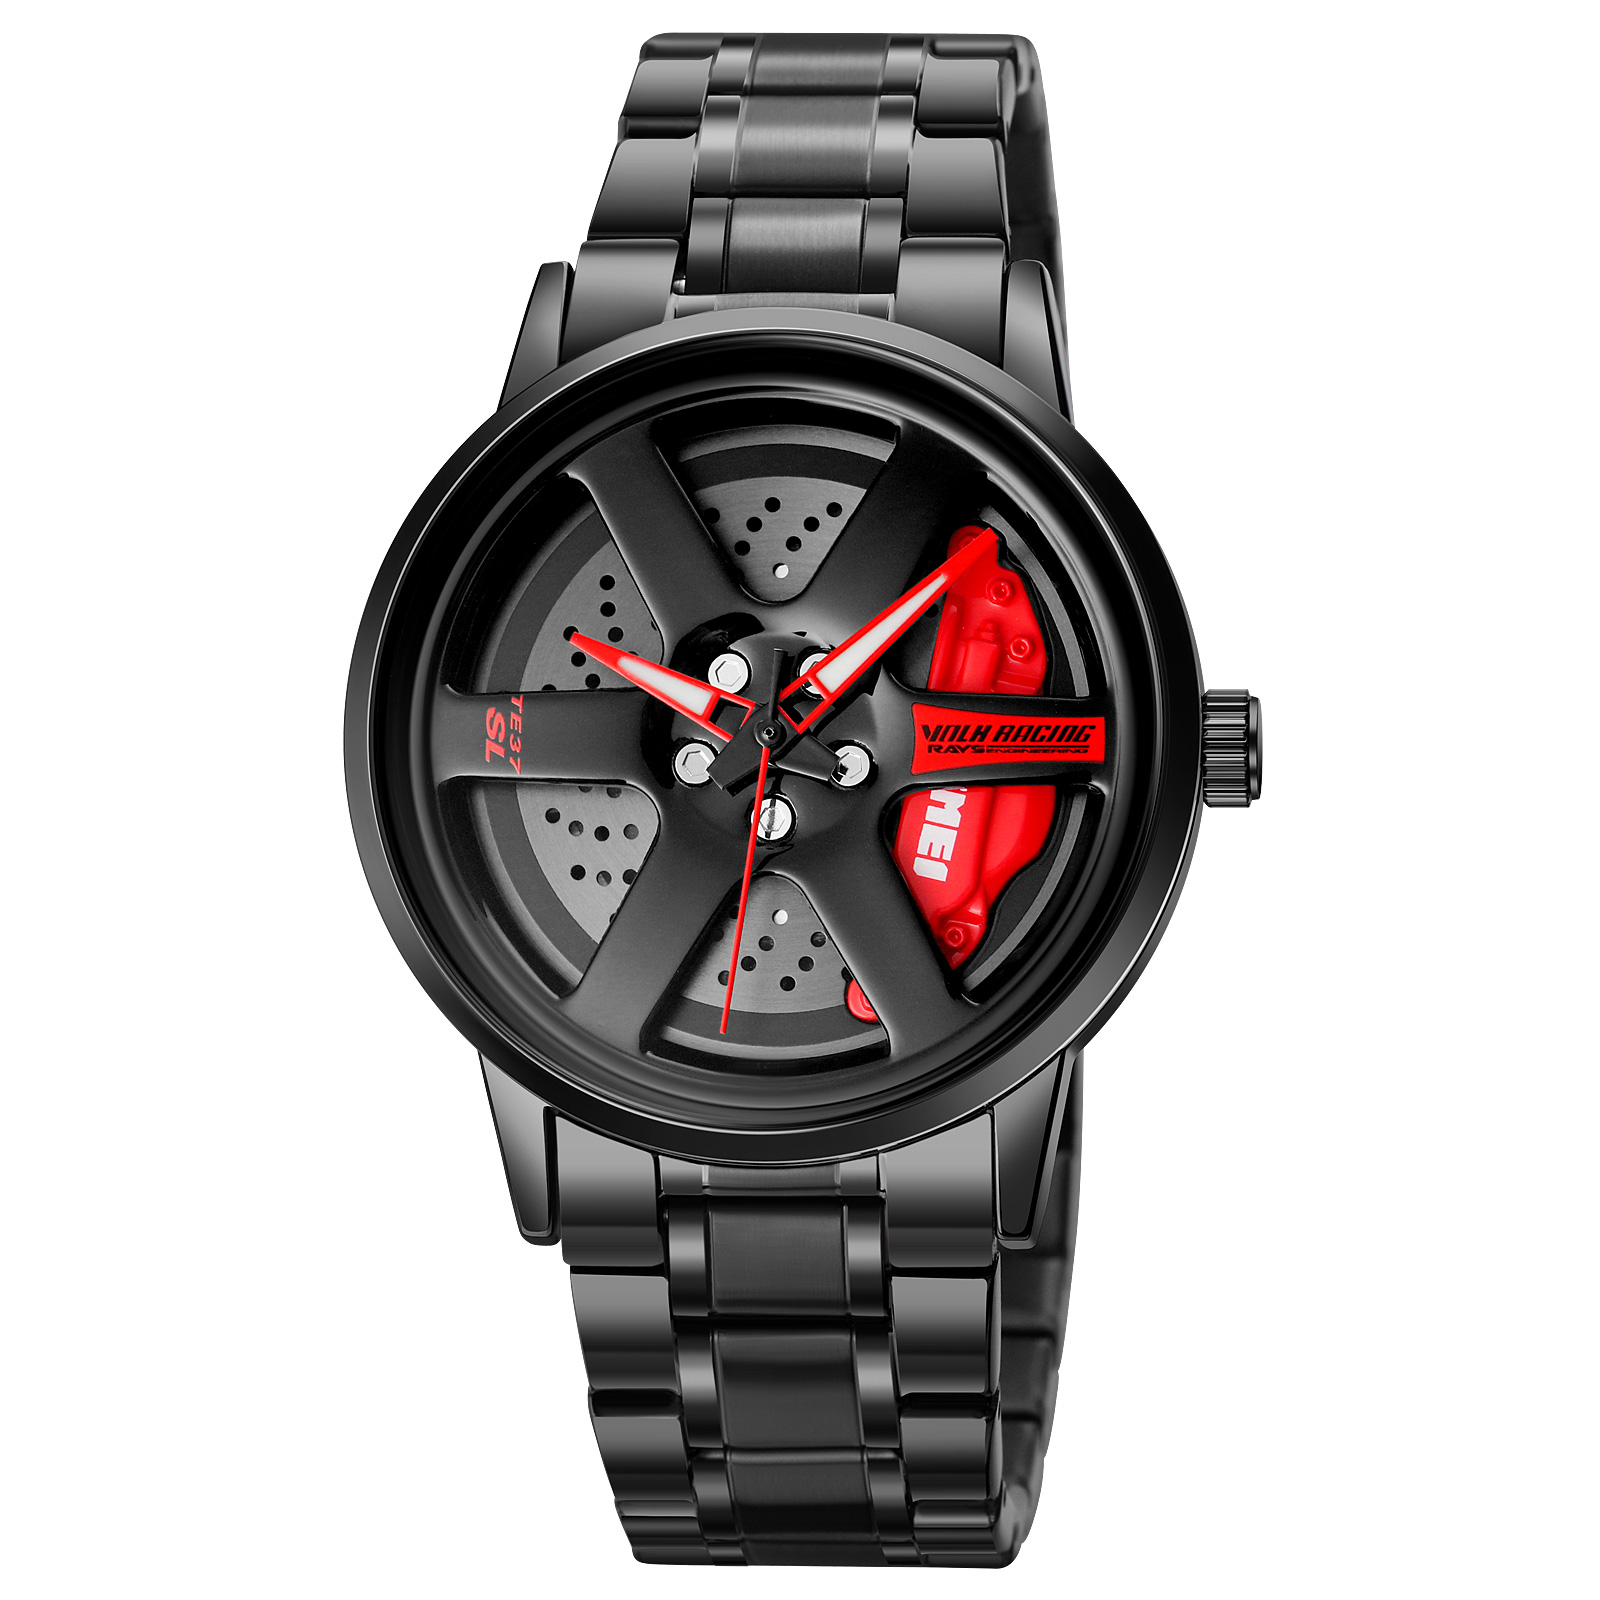 wheel watches-Skmei Watch Manufacture Co.,Ltd